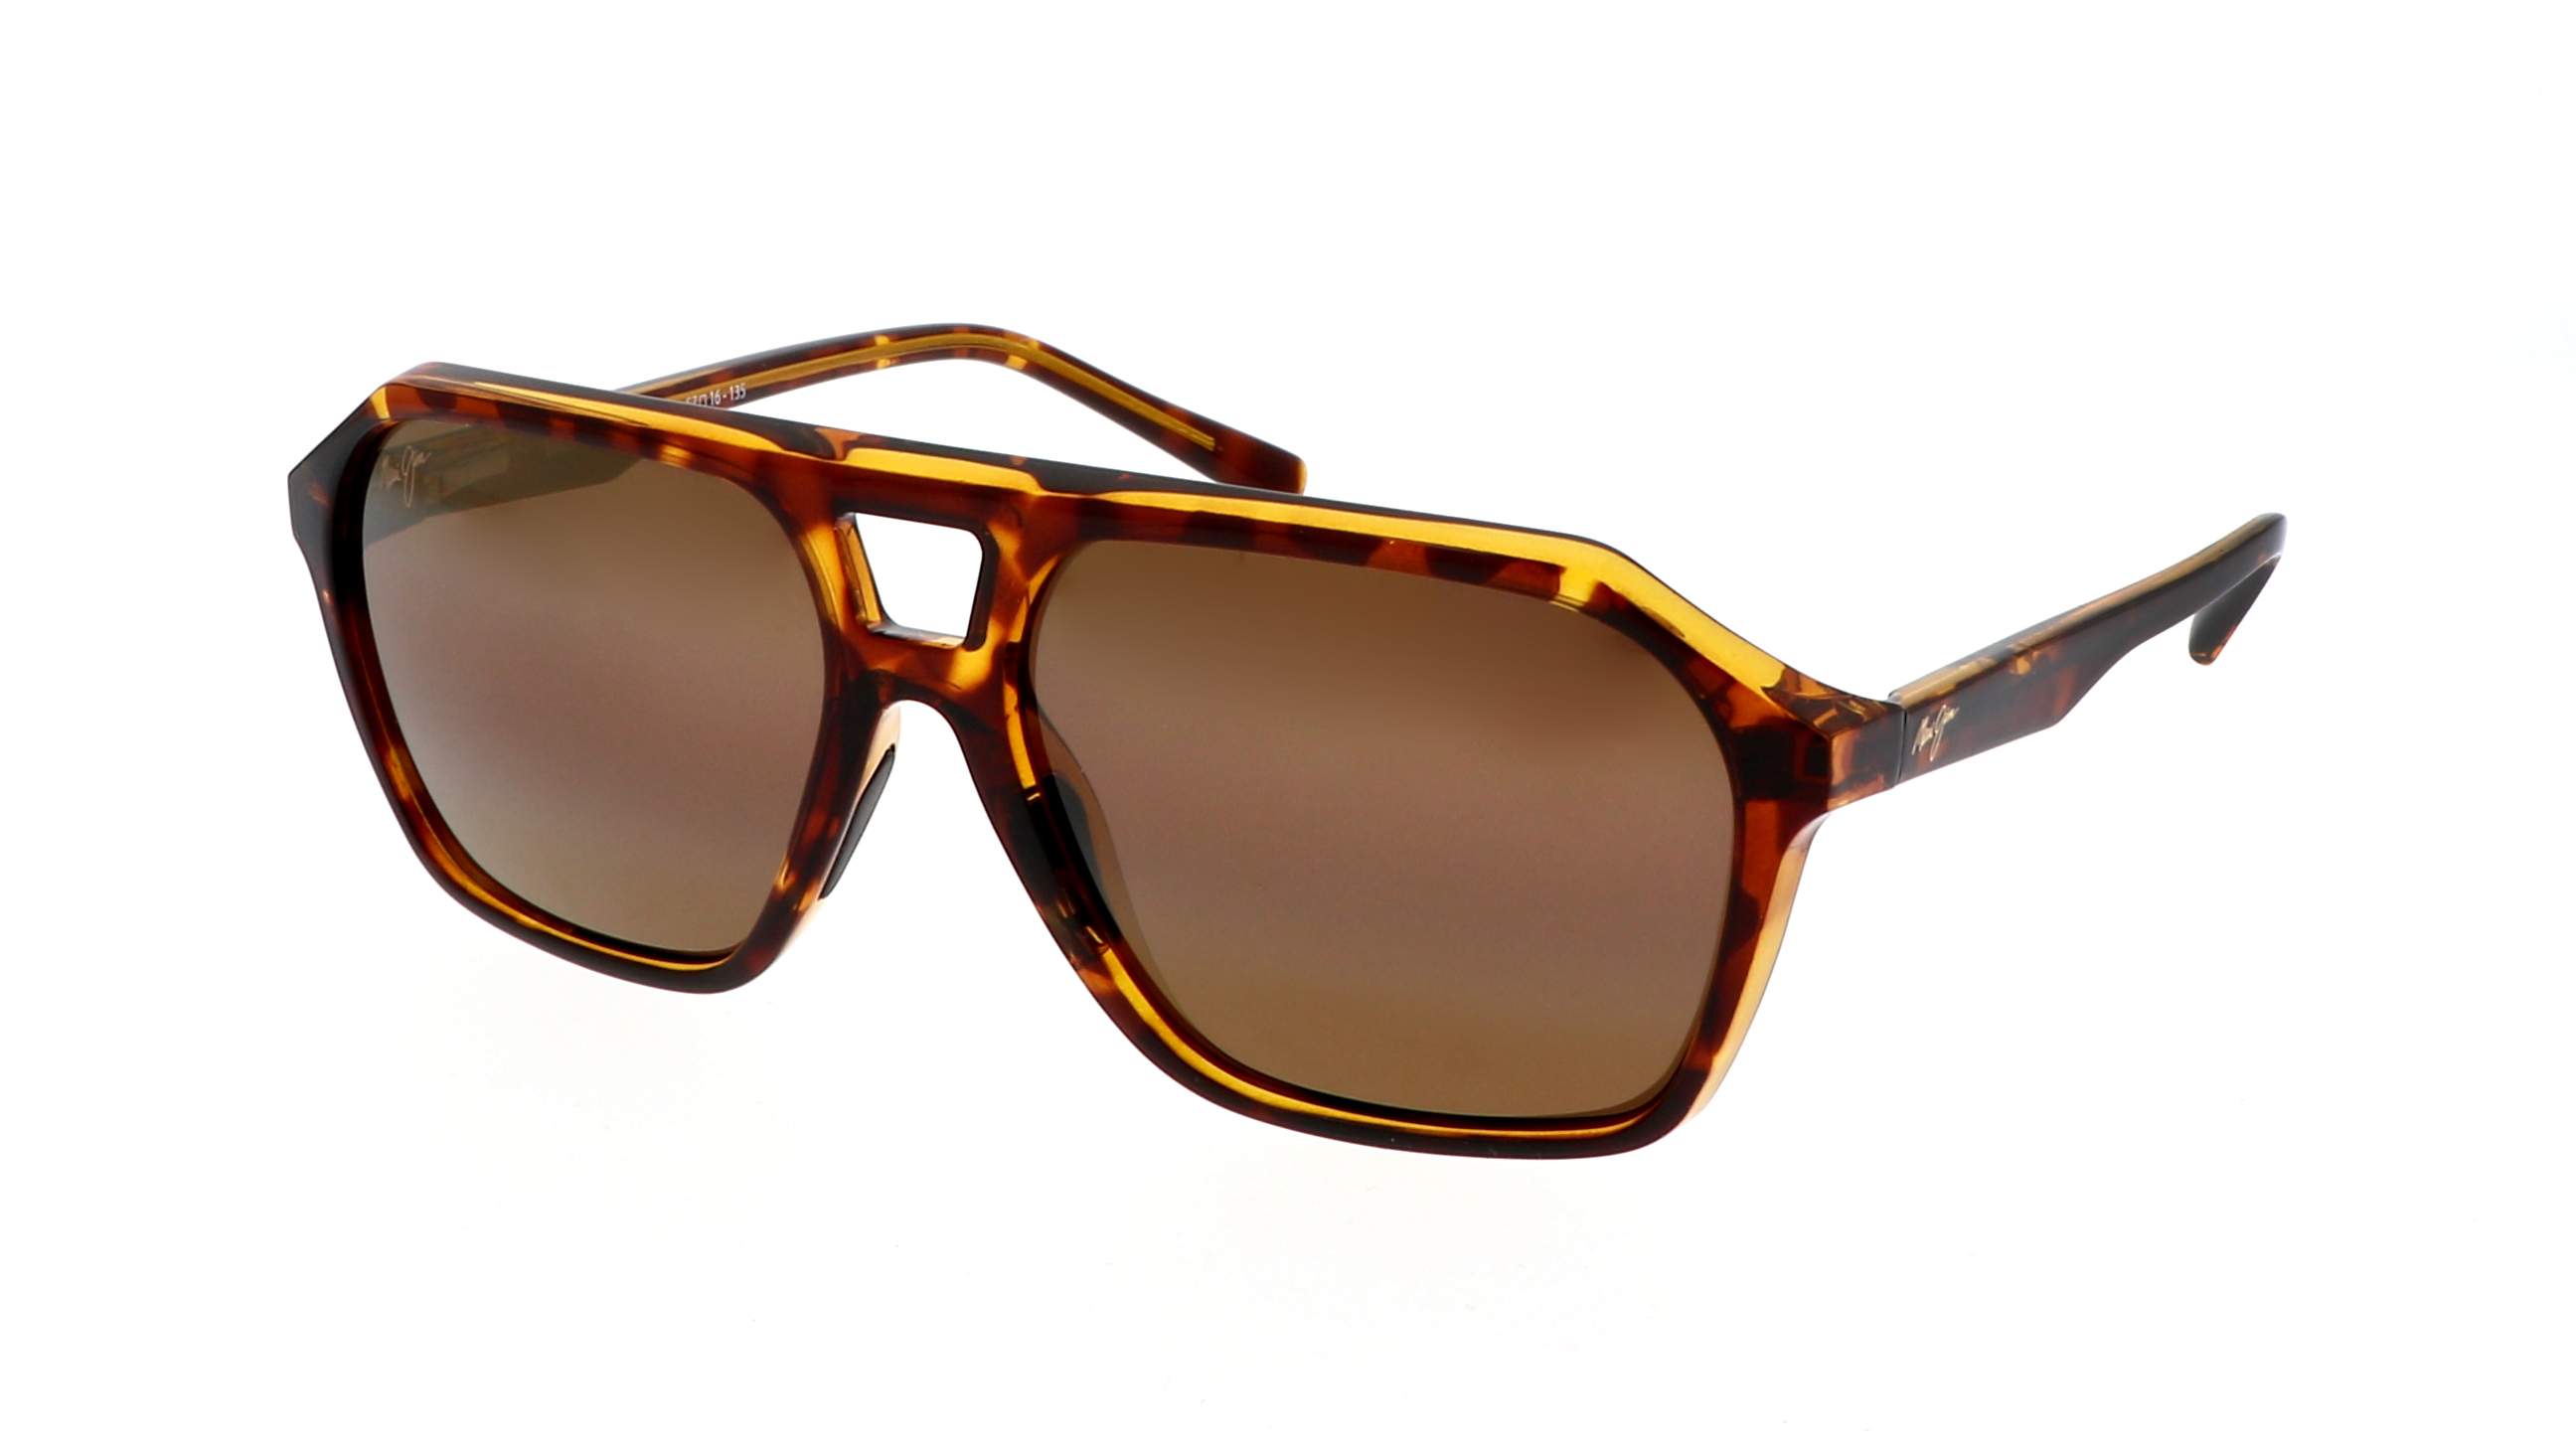 Sunglasses Maui Jim Wedges H880-10 57-16 Tortoise in stock | Price 156 ...